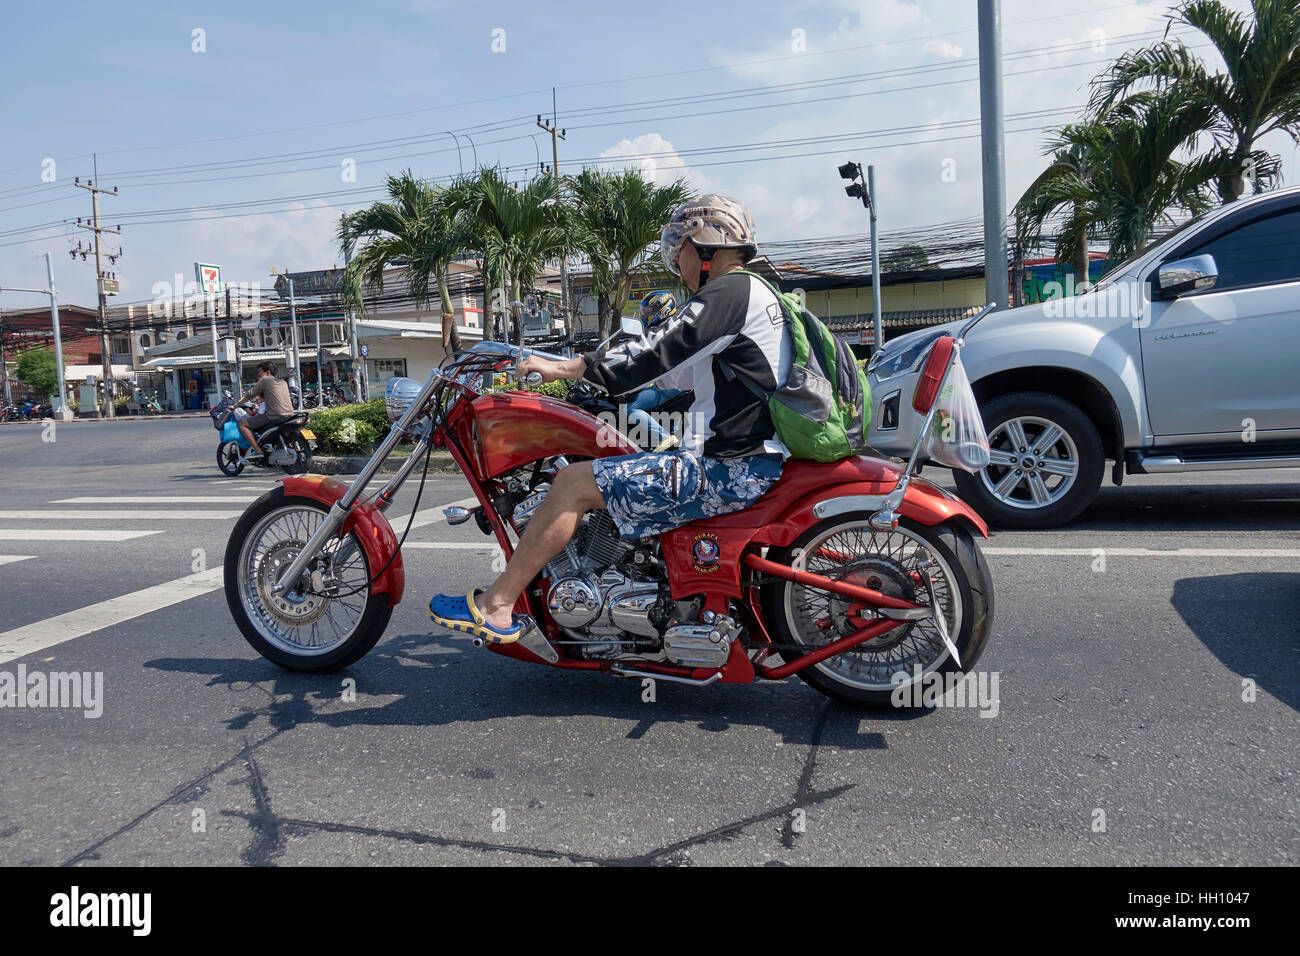 Harley Davidson chopper motorcycle. Stock Photo